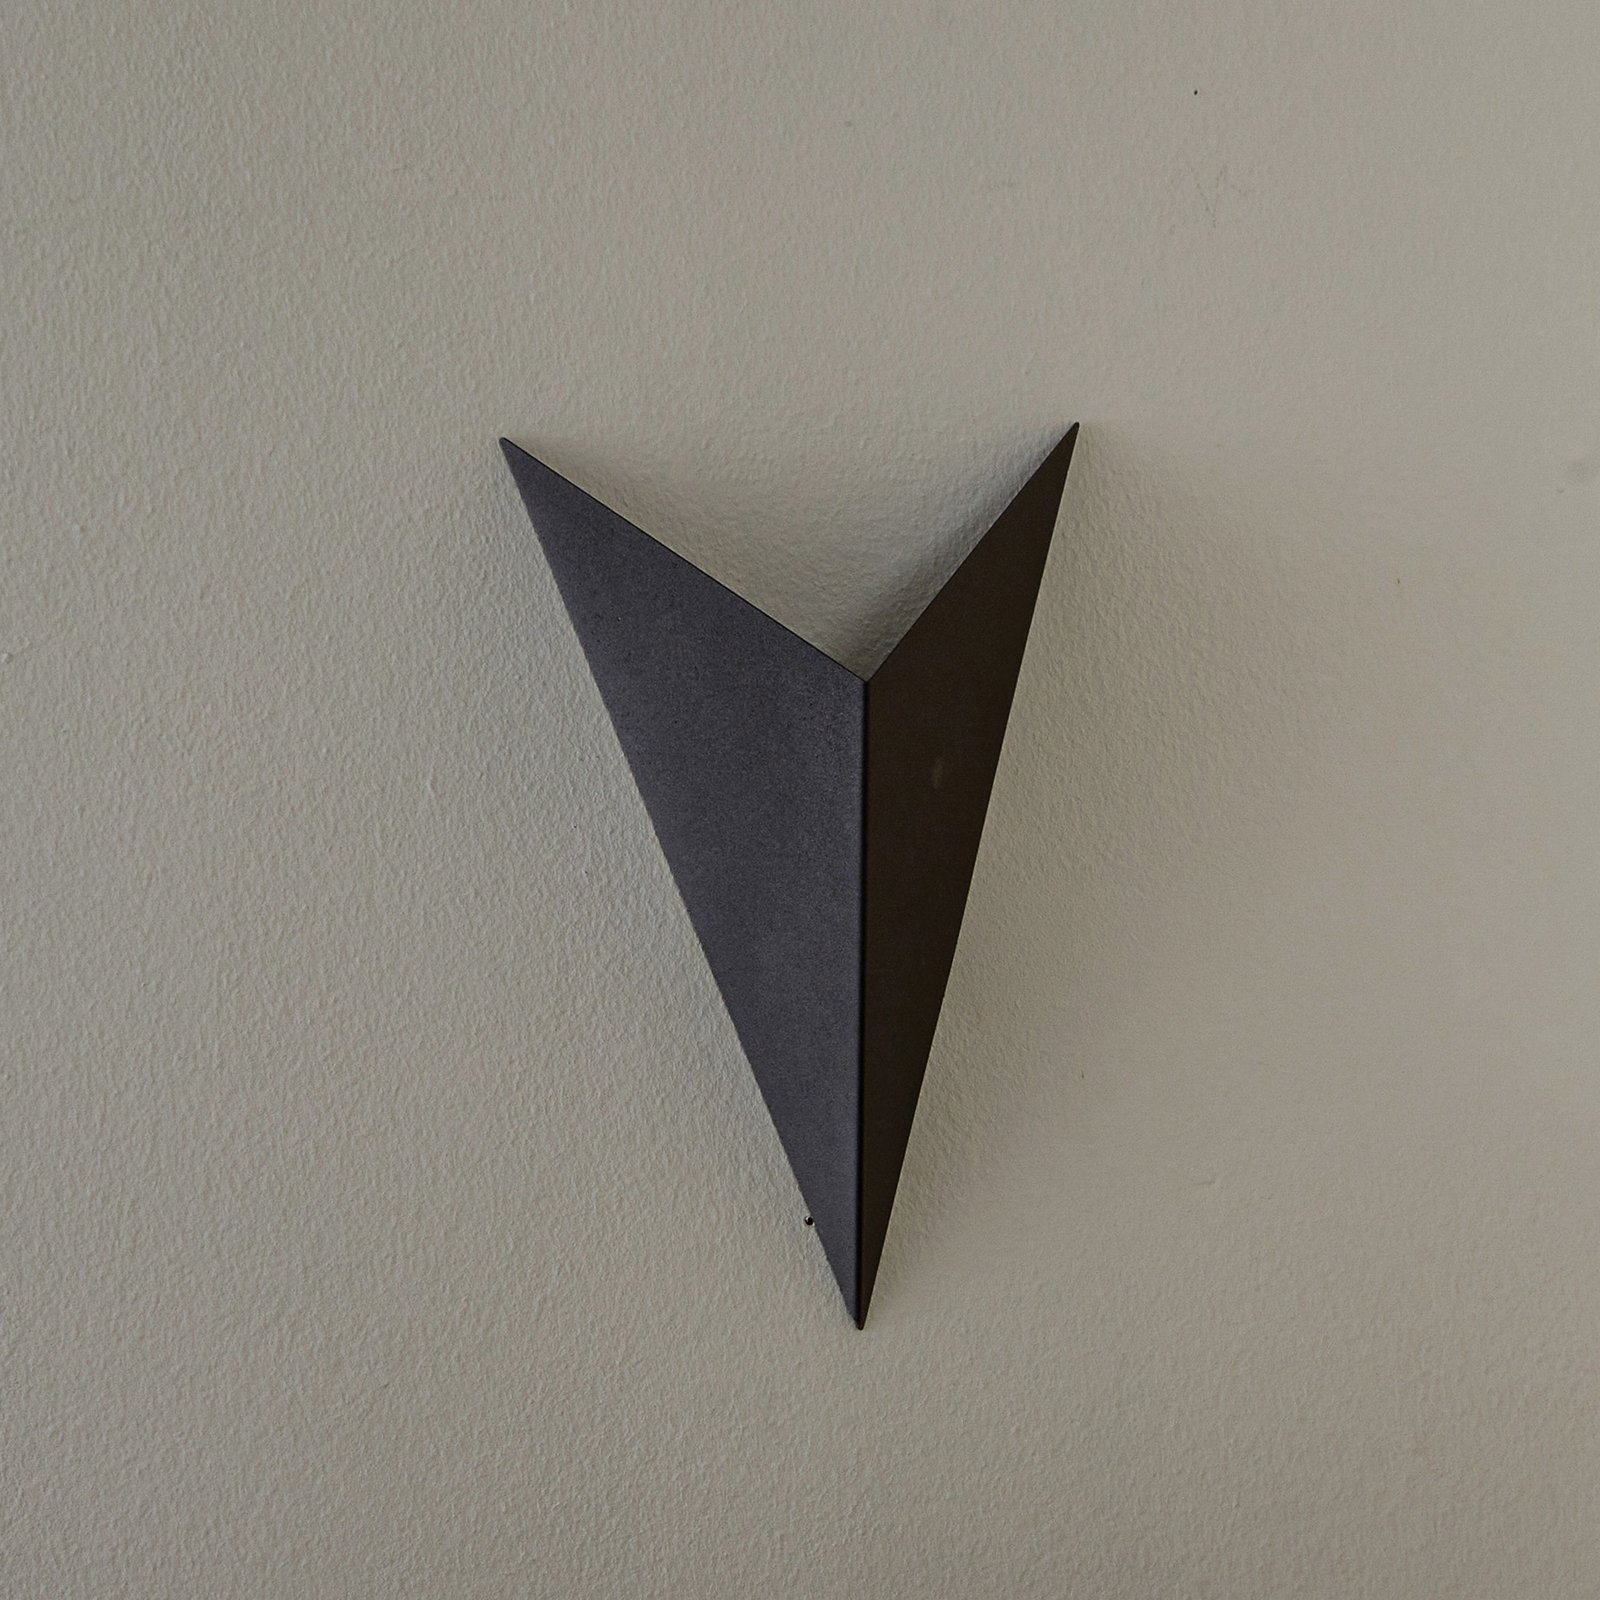 Wandlamp vorm 4, zwart, 19 x 30 cm